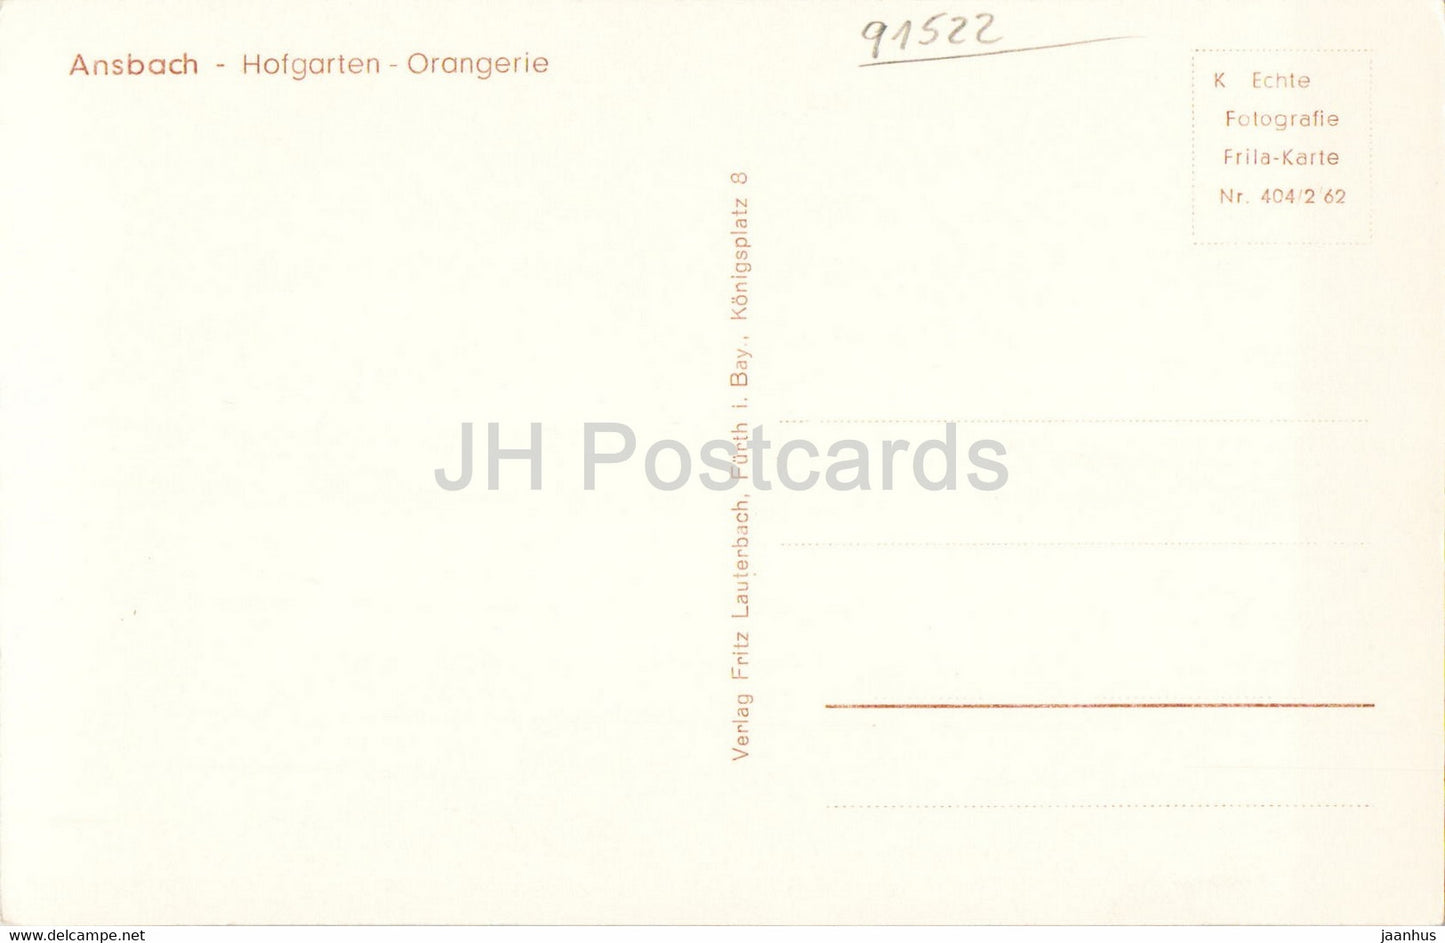 Ansbach - Hofgarten - Orangerie - carte postale ancienne - Allemagne - inutilisée